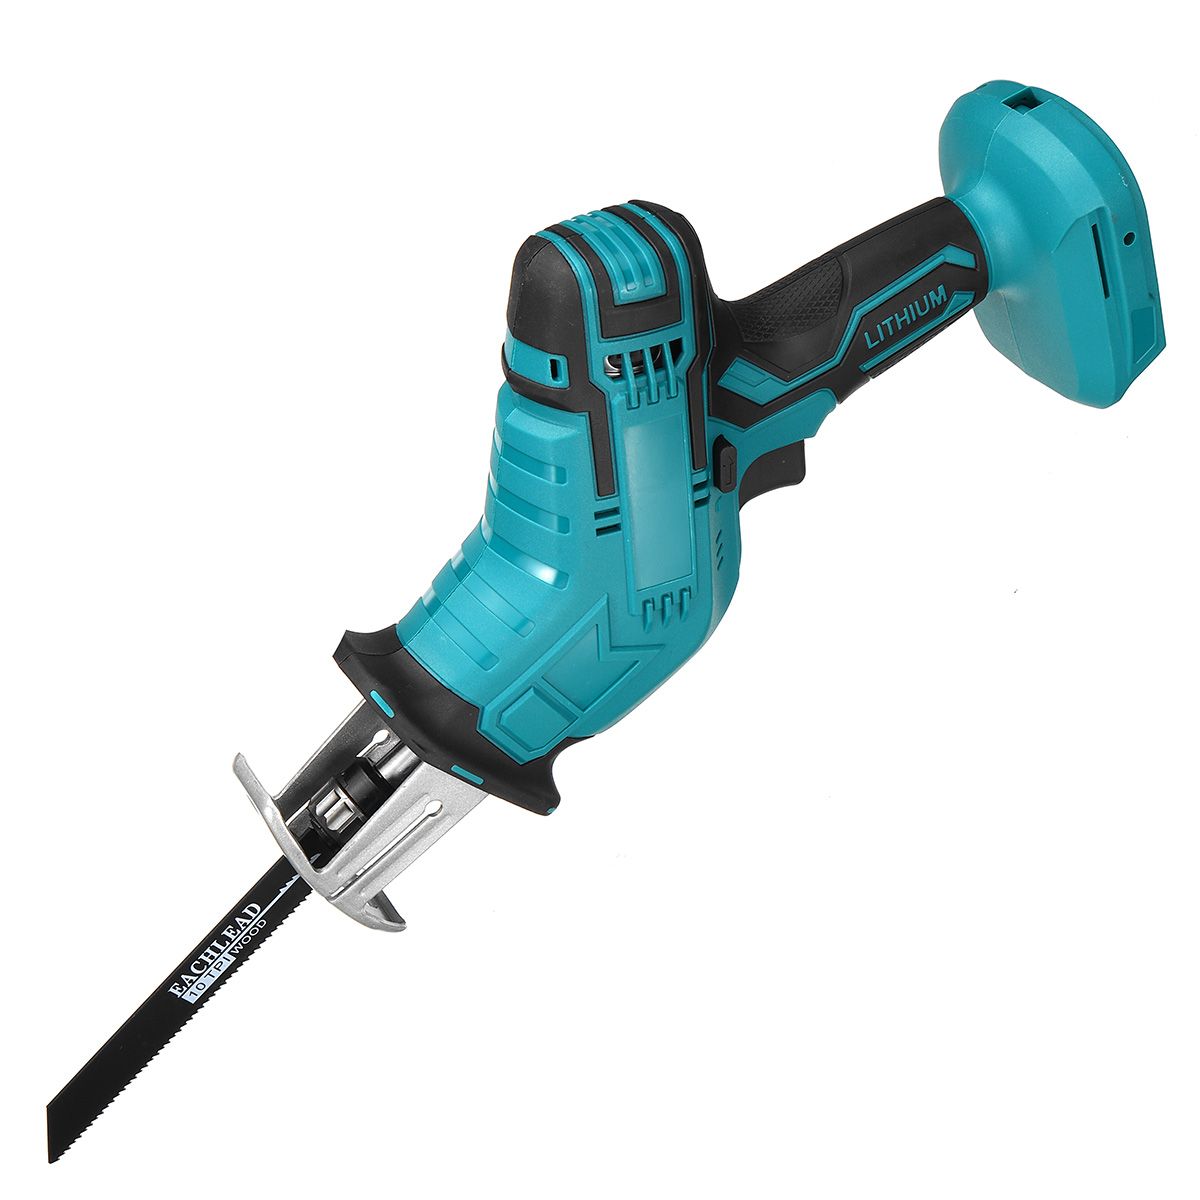 Cordless-Handheld-Electric-Reciprocating-Saw-Saber-Saw-W-12X-Blades-For-Makita-18V-Battery-1723641